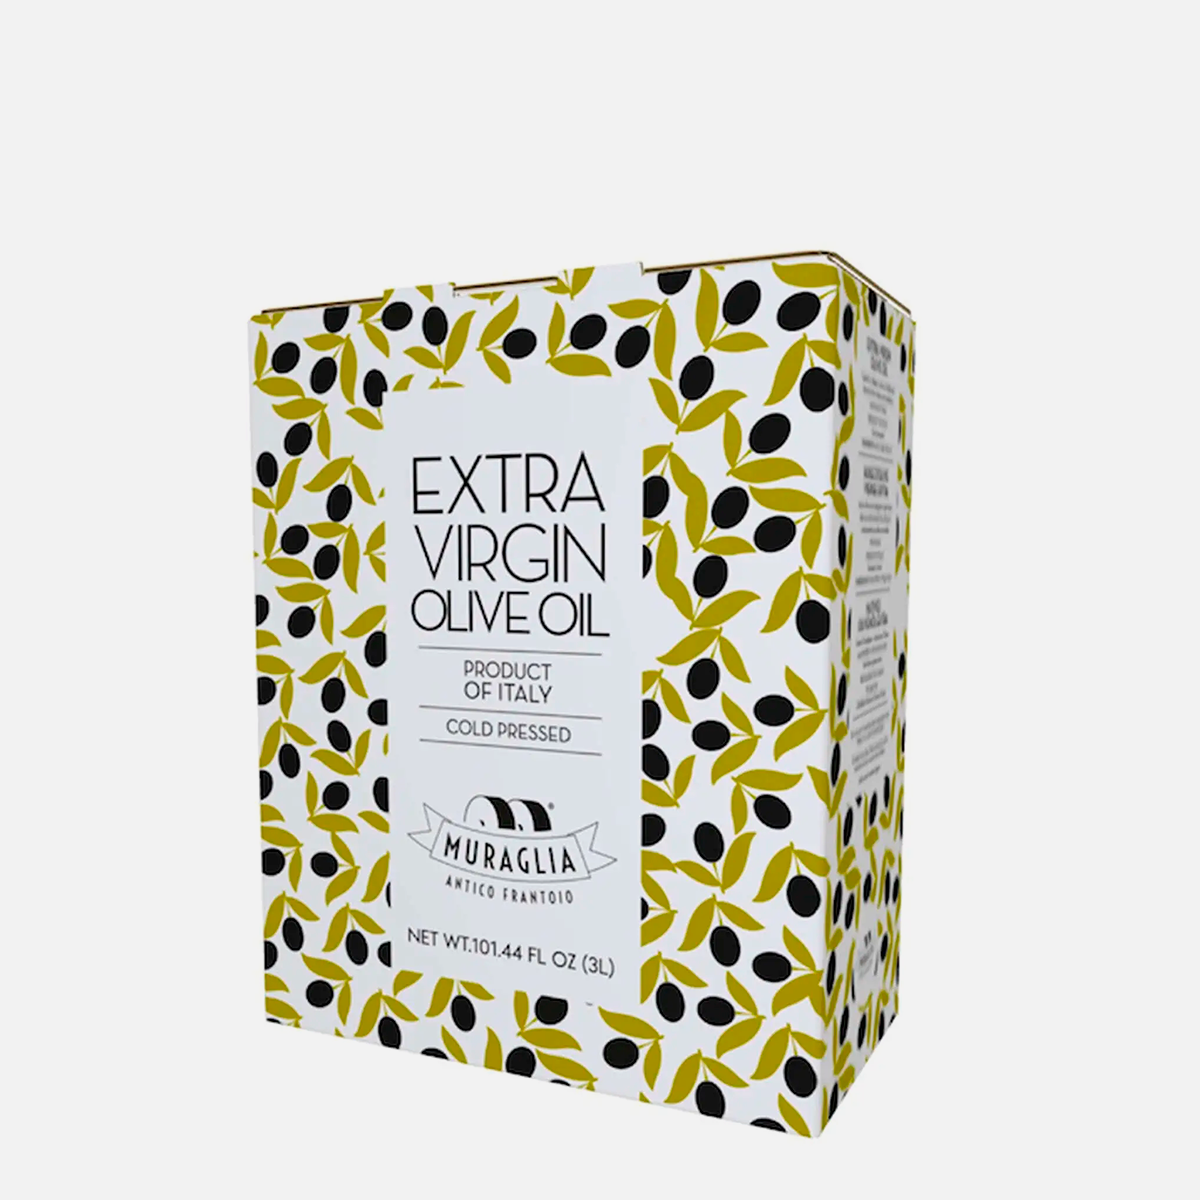 Frantoio Muraglia - 3 liters Extra virgin olive oil